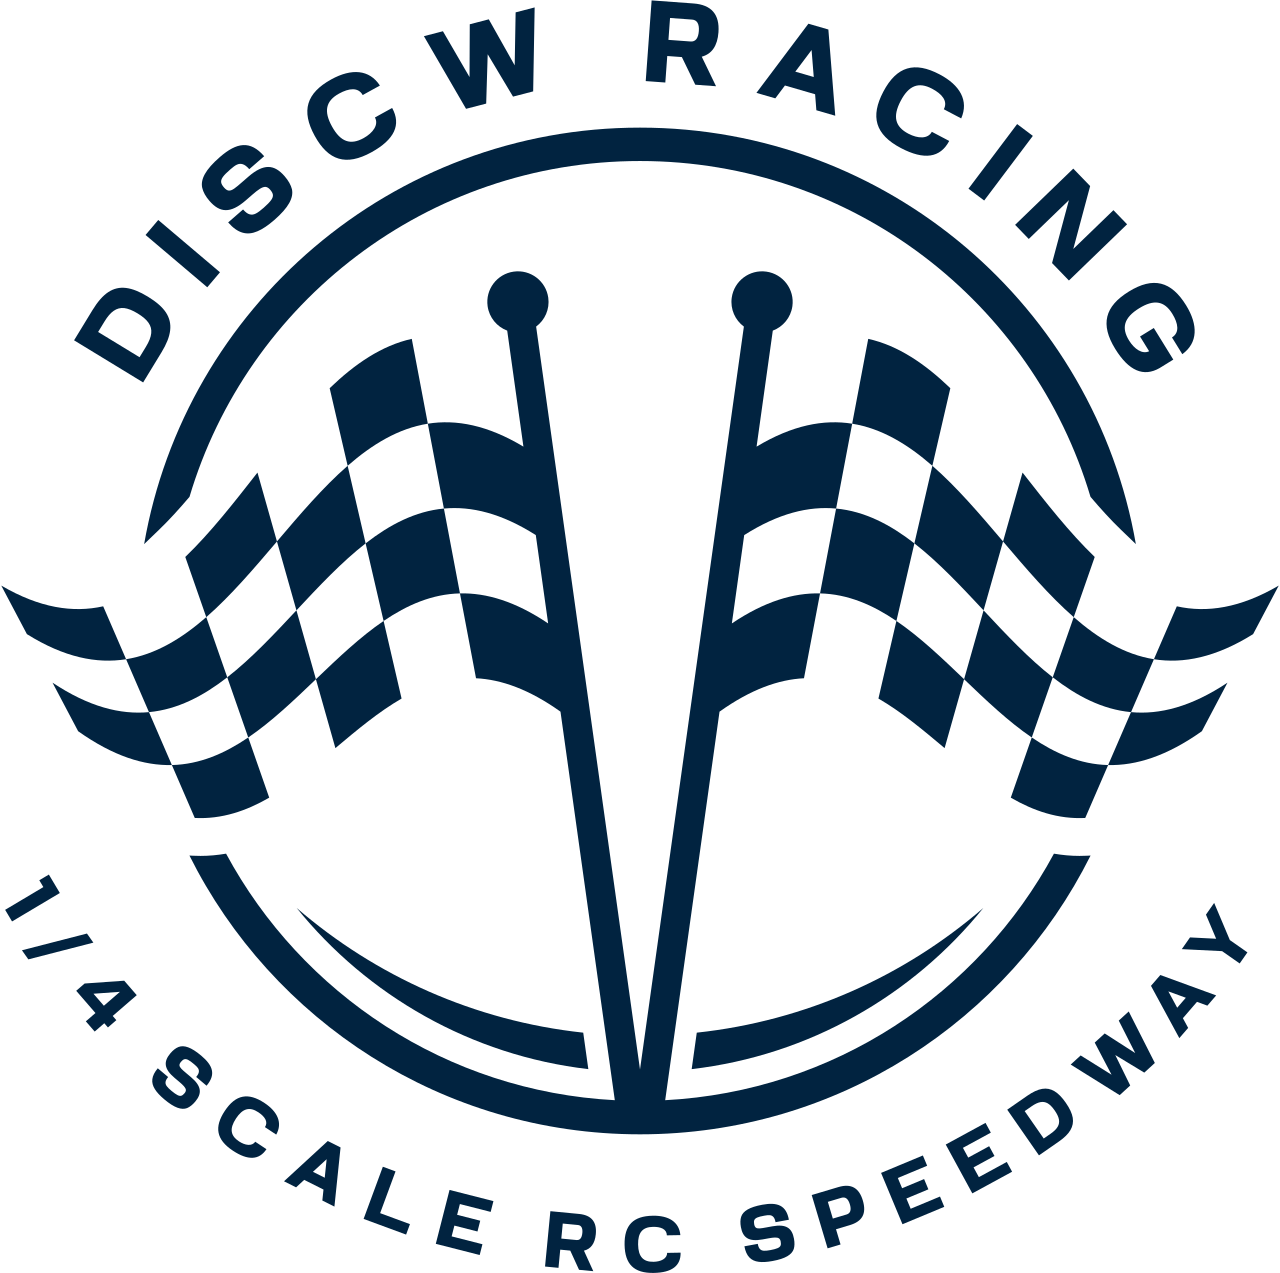 DISCW RACING's logo